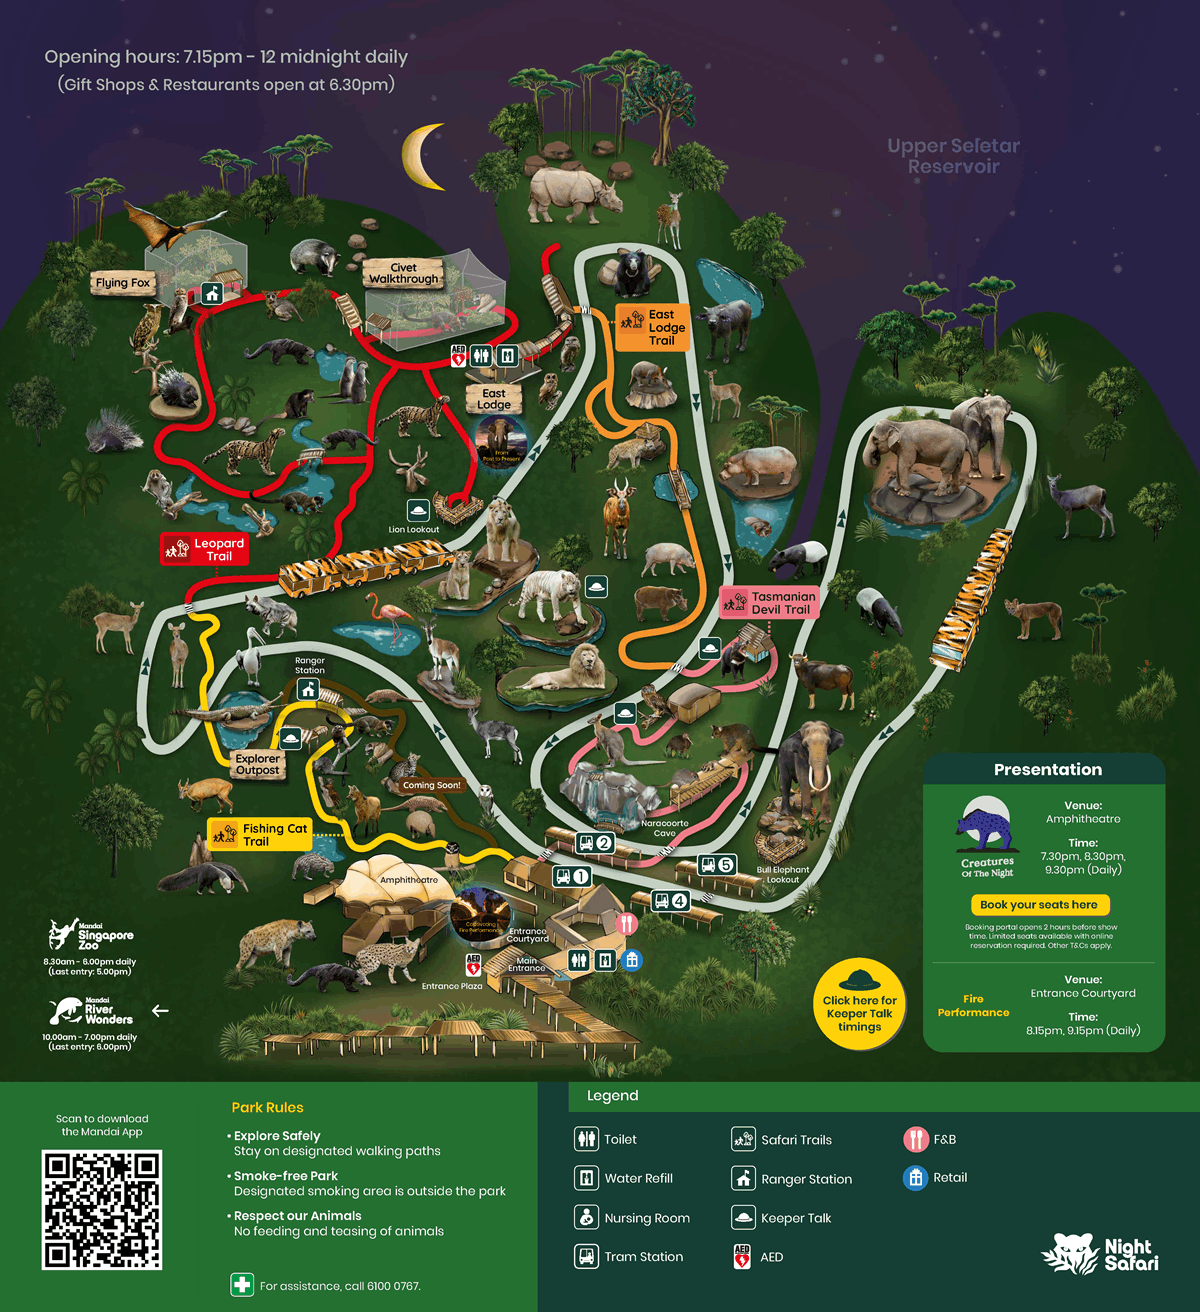 Night Safari Park Map